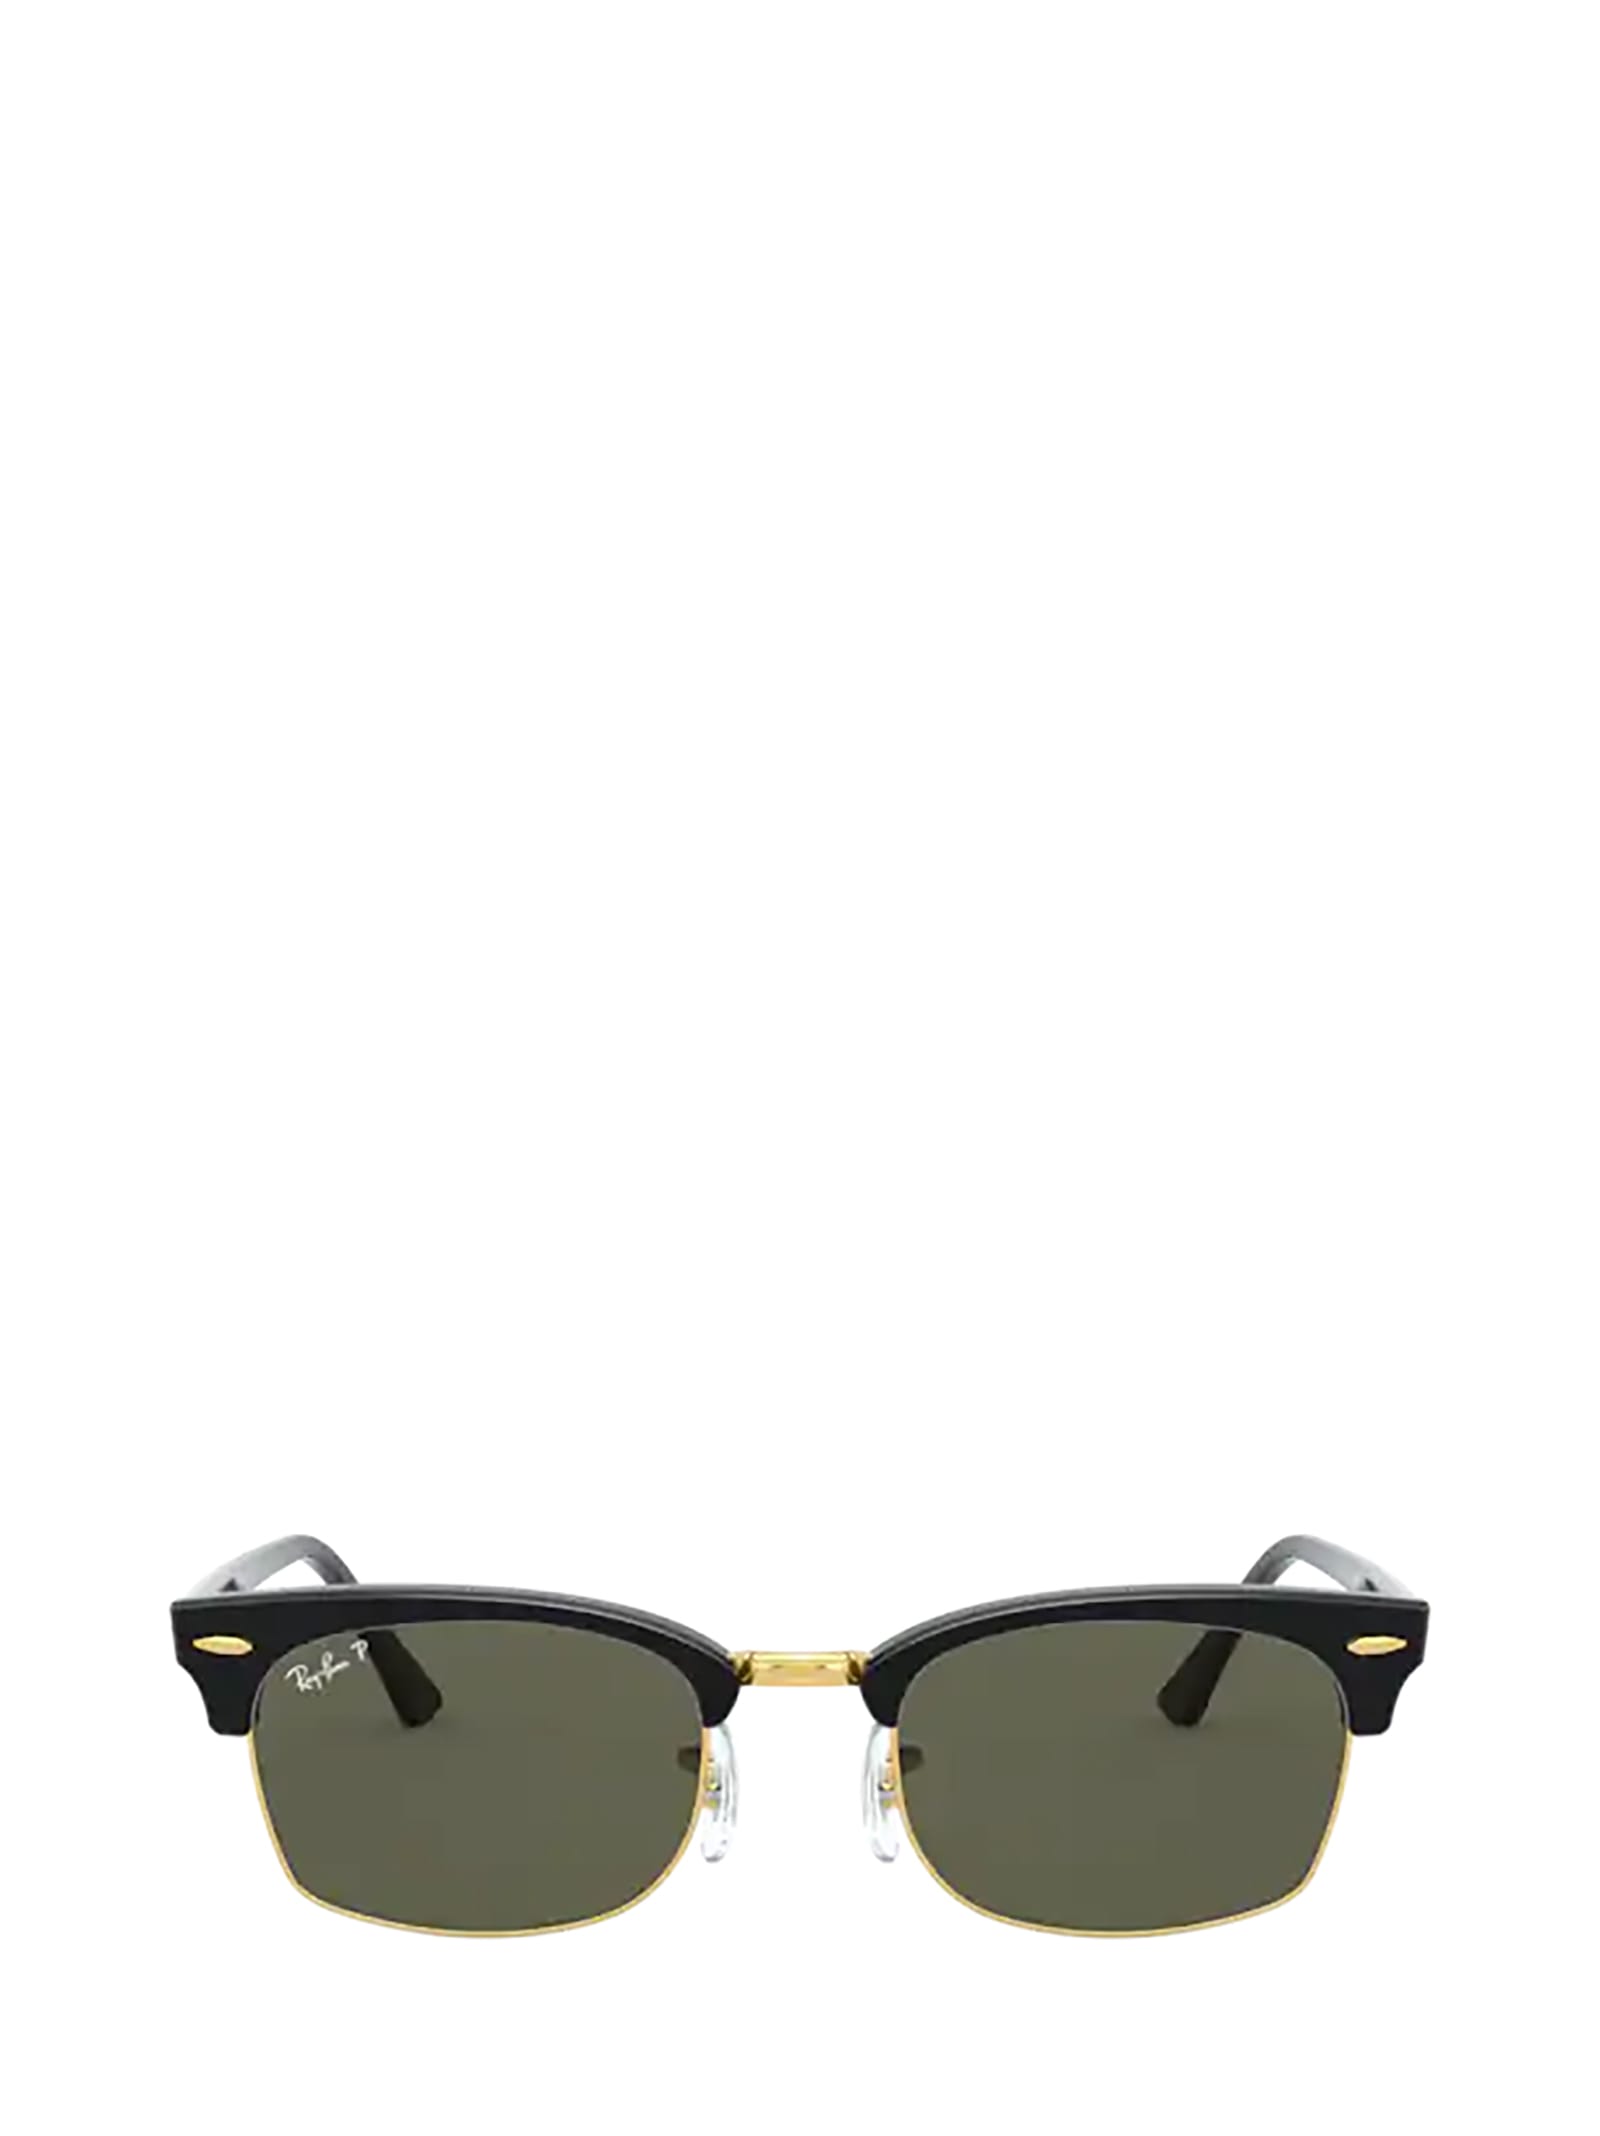 Ray Ban Ray-ban Rb3916 Black Sunglasses